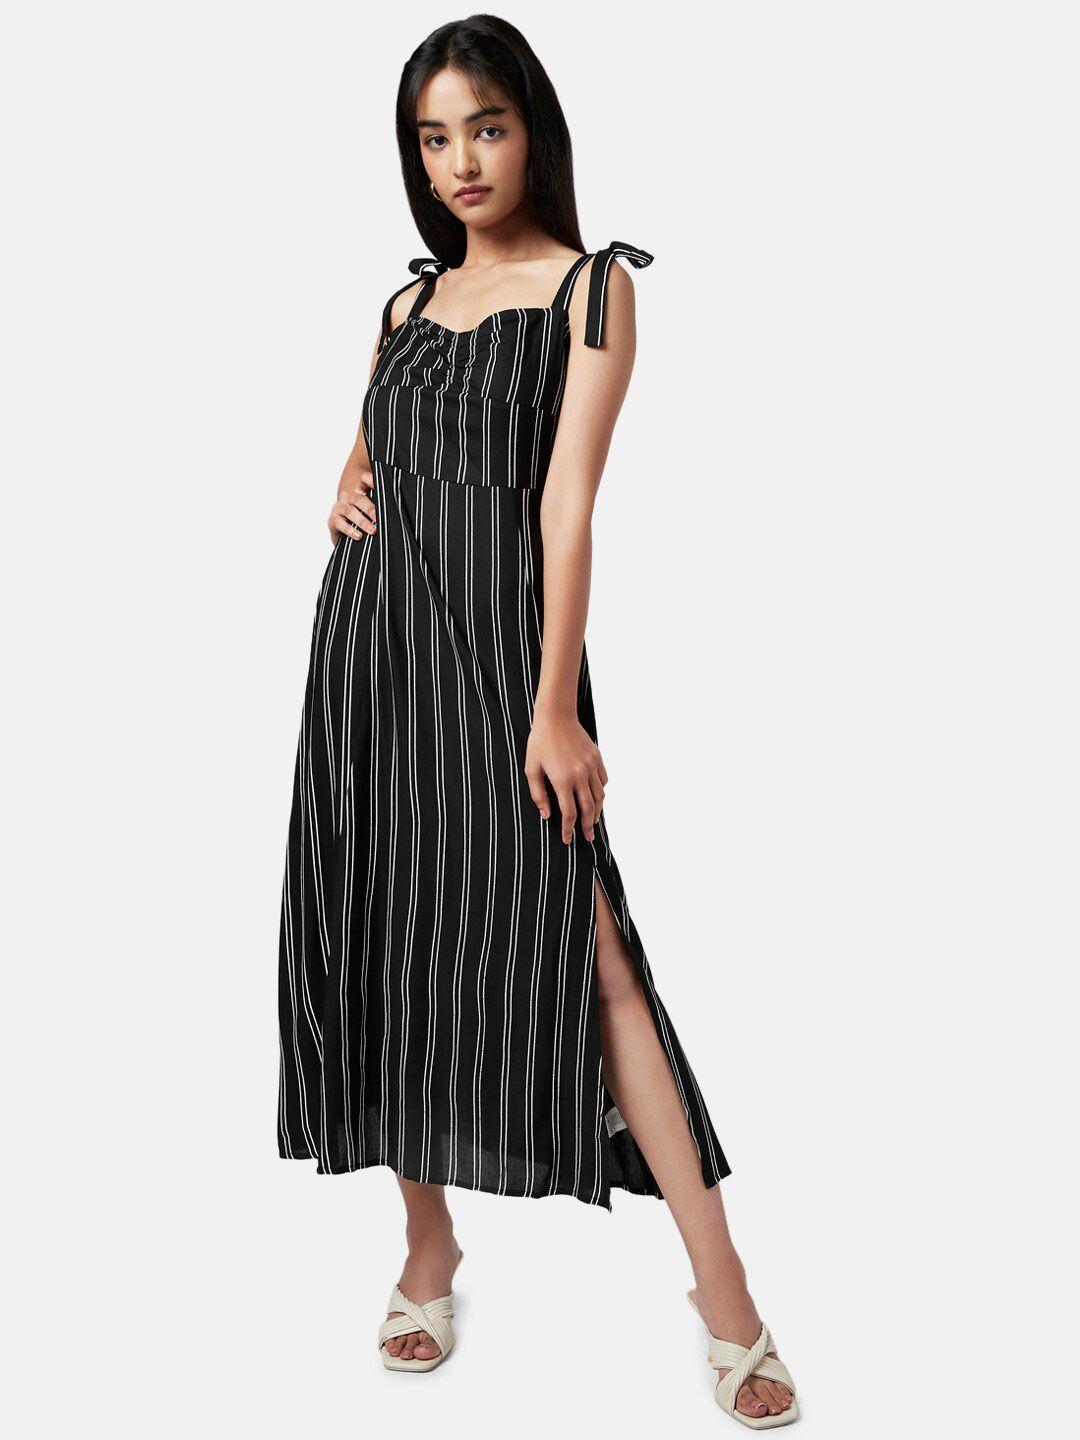 YU by Pantaloons Black Striped Ethnic A-Line Maxi Dress